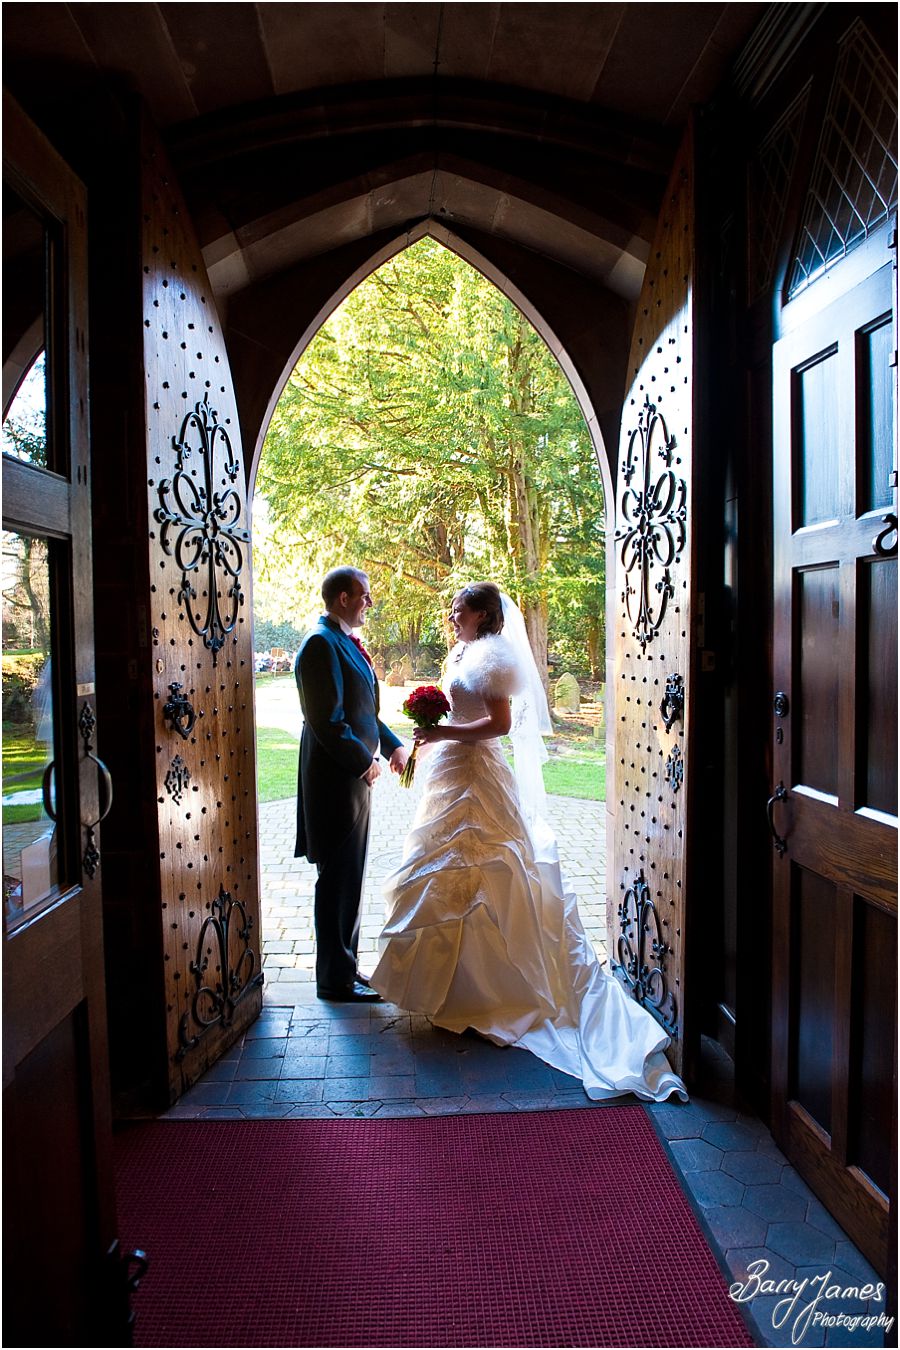 Beautiful wedding photography at Christchurch in Lichfield by Lichfield Wedding Photographer Barry James